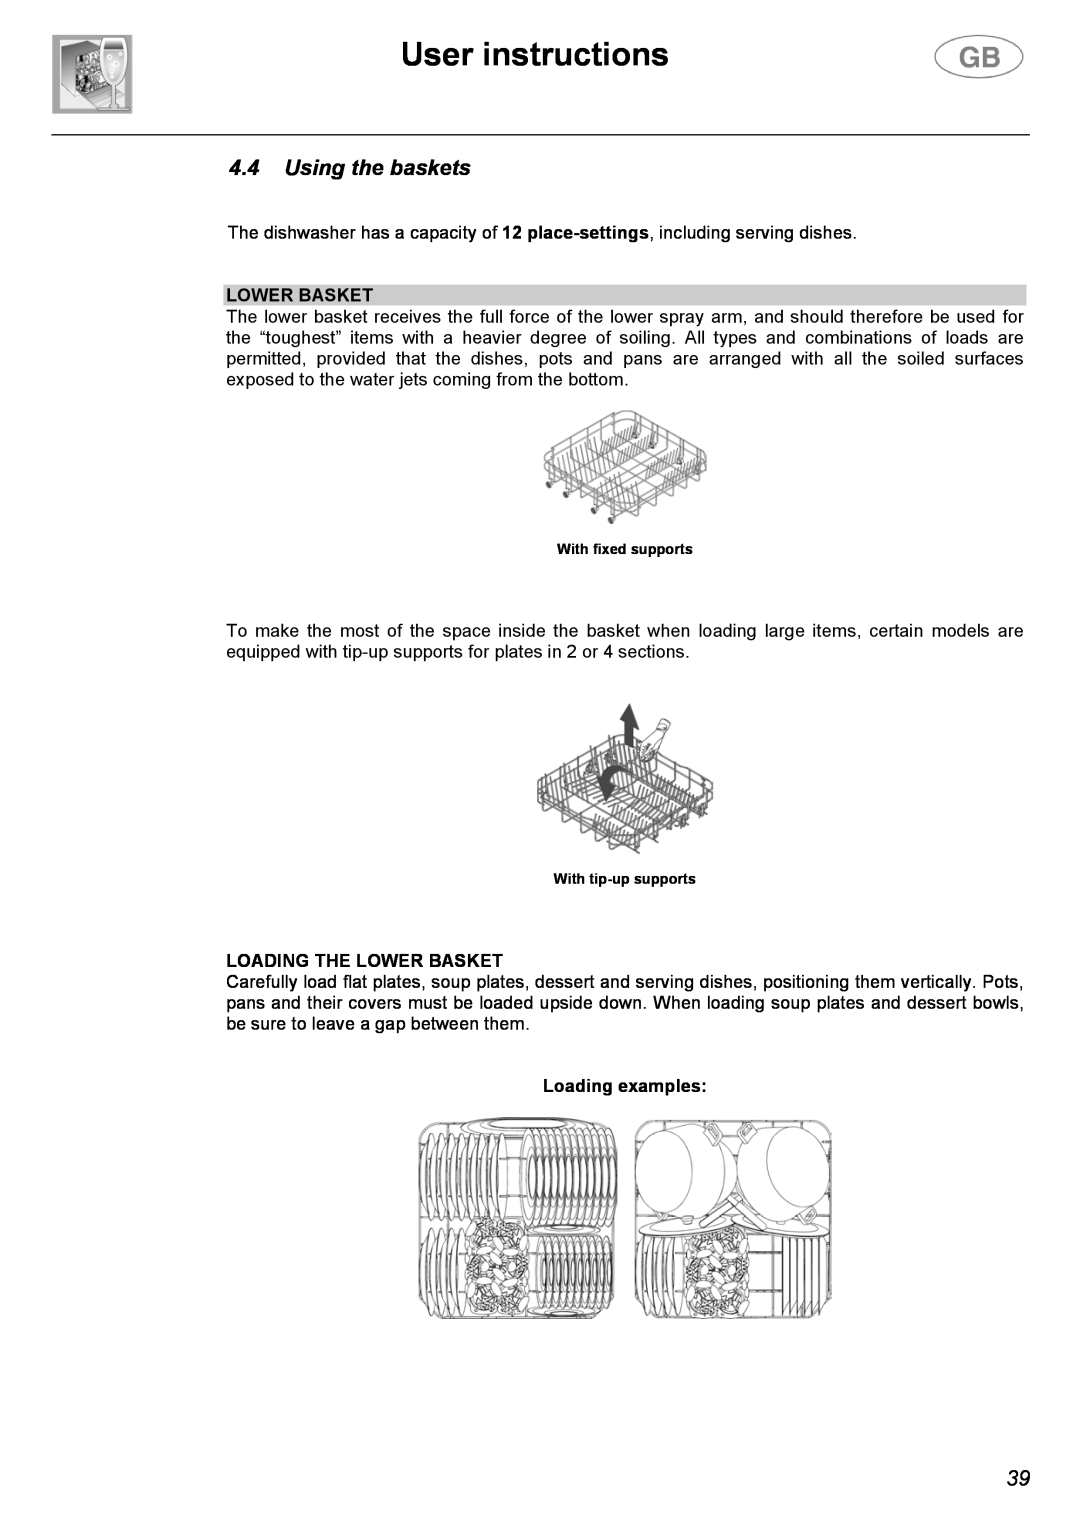 Smeg EL05 instruction manual User instructions, 4.4Using the baskets, Loading The Lower Basket, Loading examples 